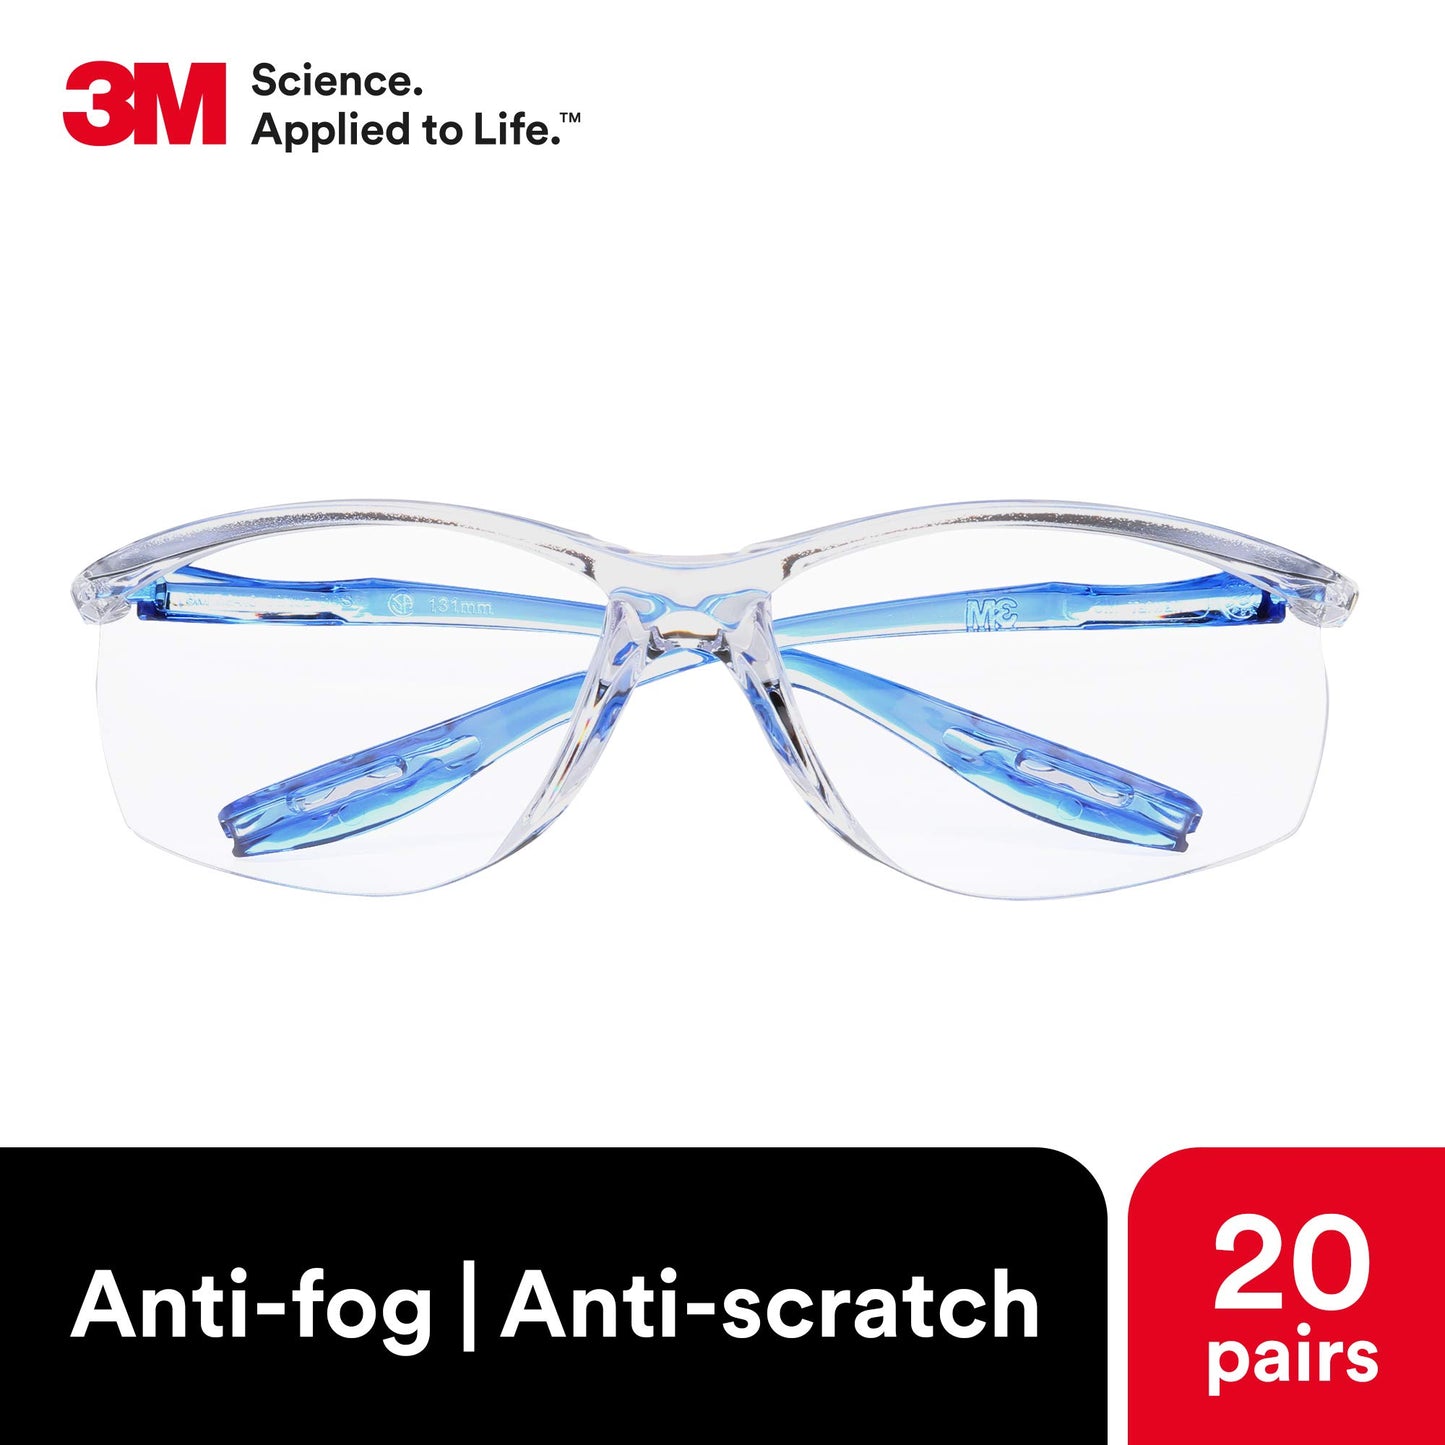 3M Safety Glasses, Virtua Sport CCS, 20 Pack, ANSI Z87, Anti-Fog, Anti-Scratch, Clear Lens, Blue Frame, Corded Ear Plug Control System